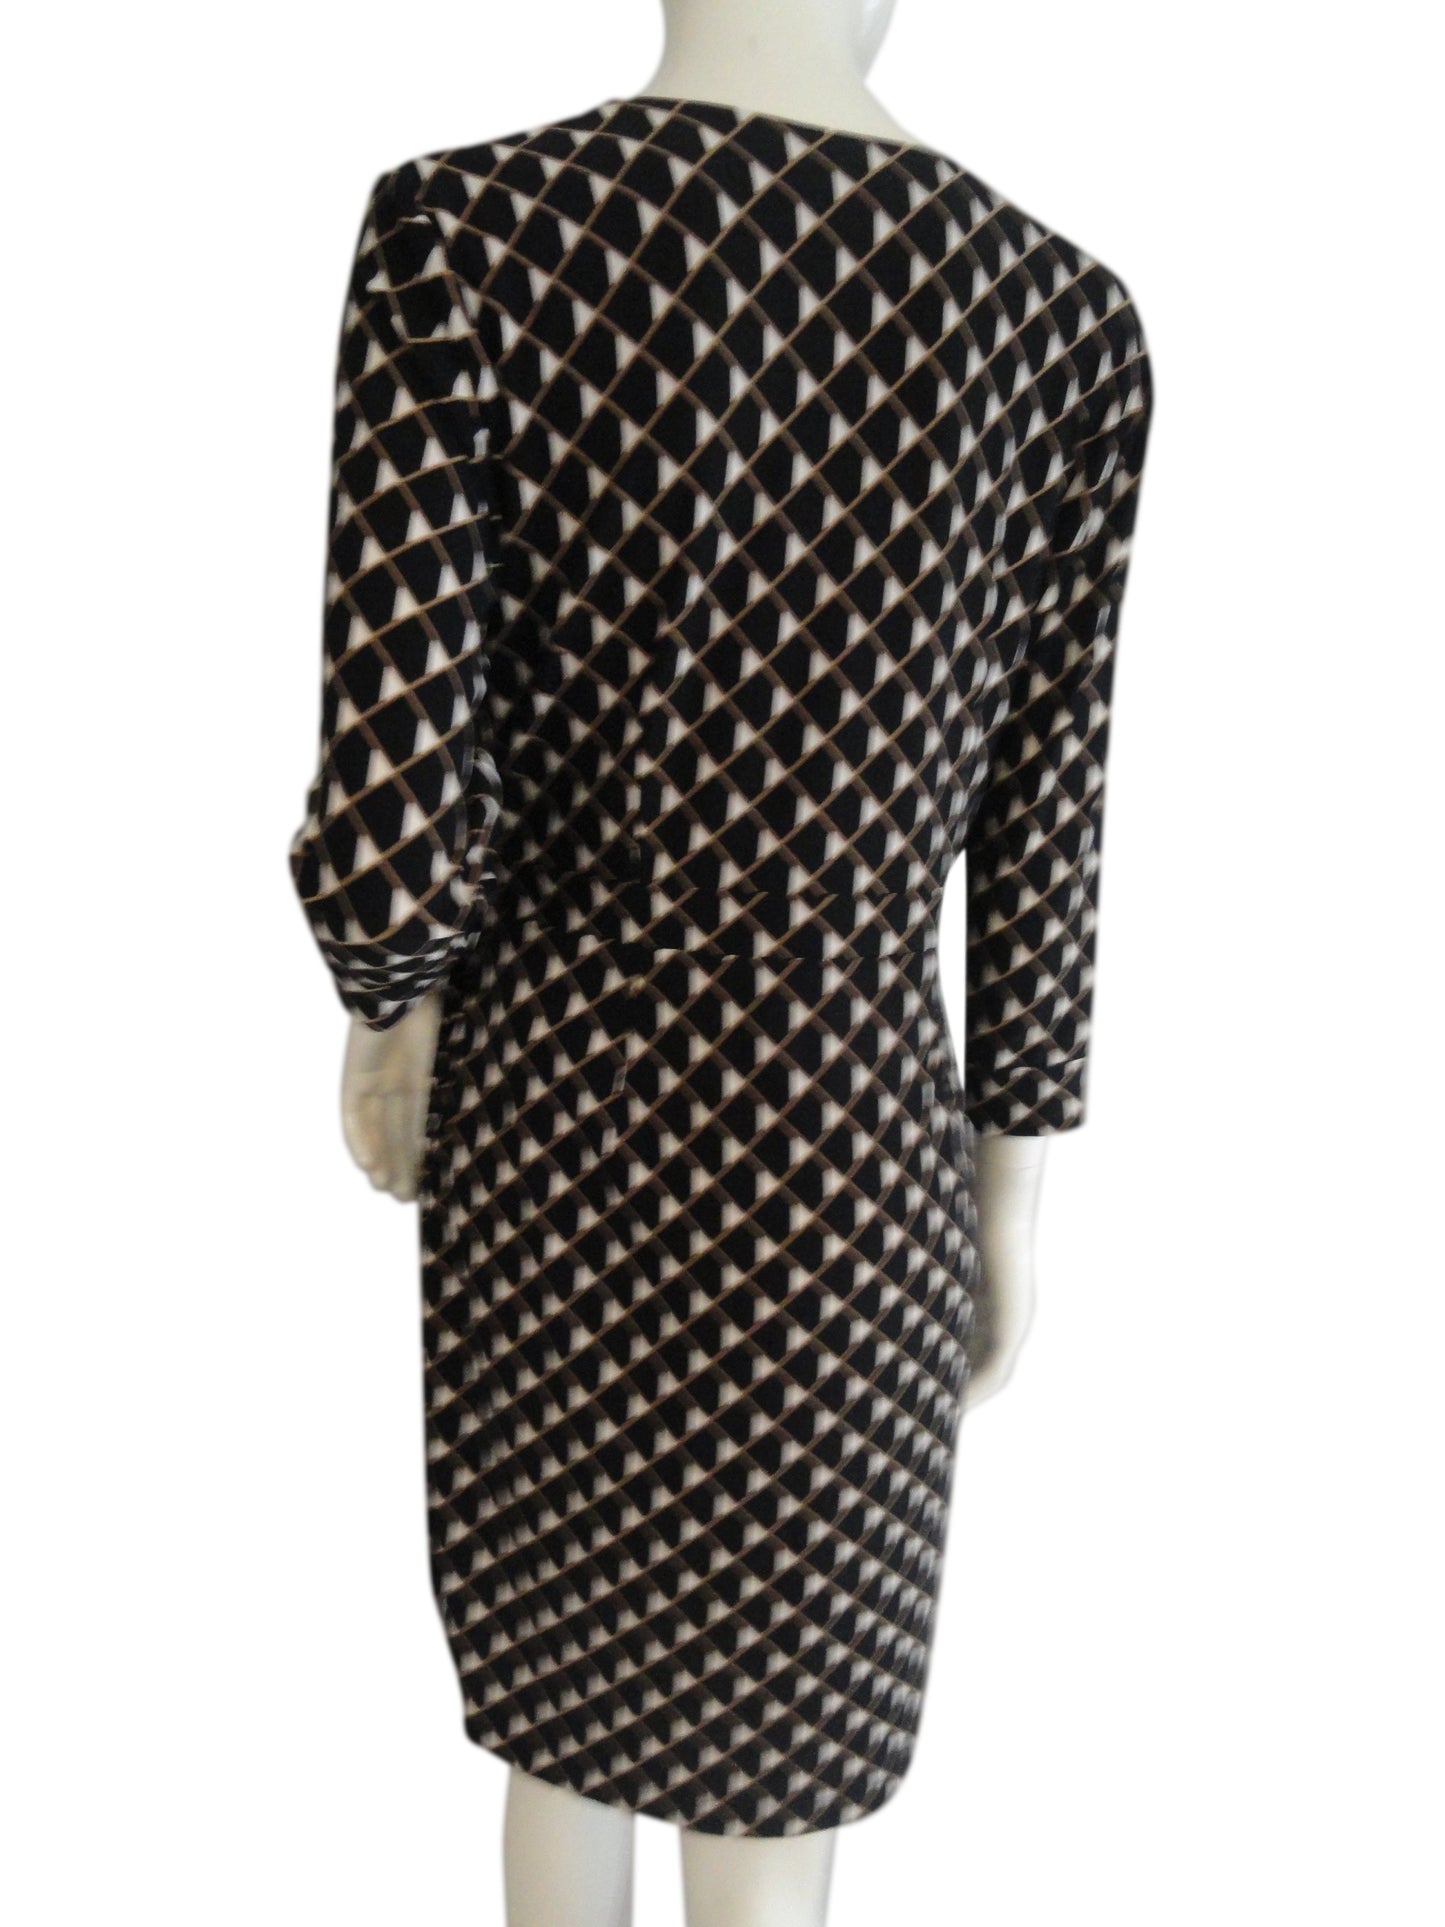 Tommy Hilfiger 70's Black, White, and Brown Dress size 8 SKU 000194-16